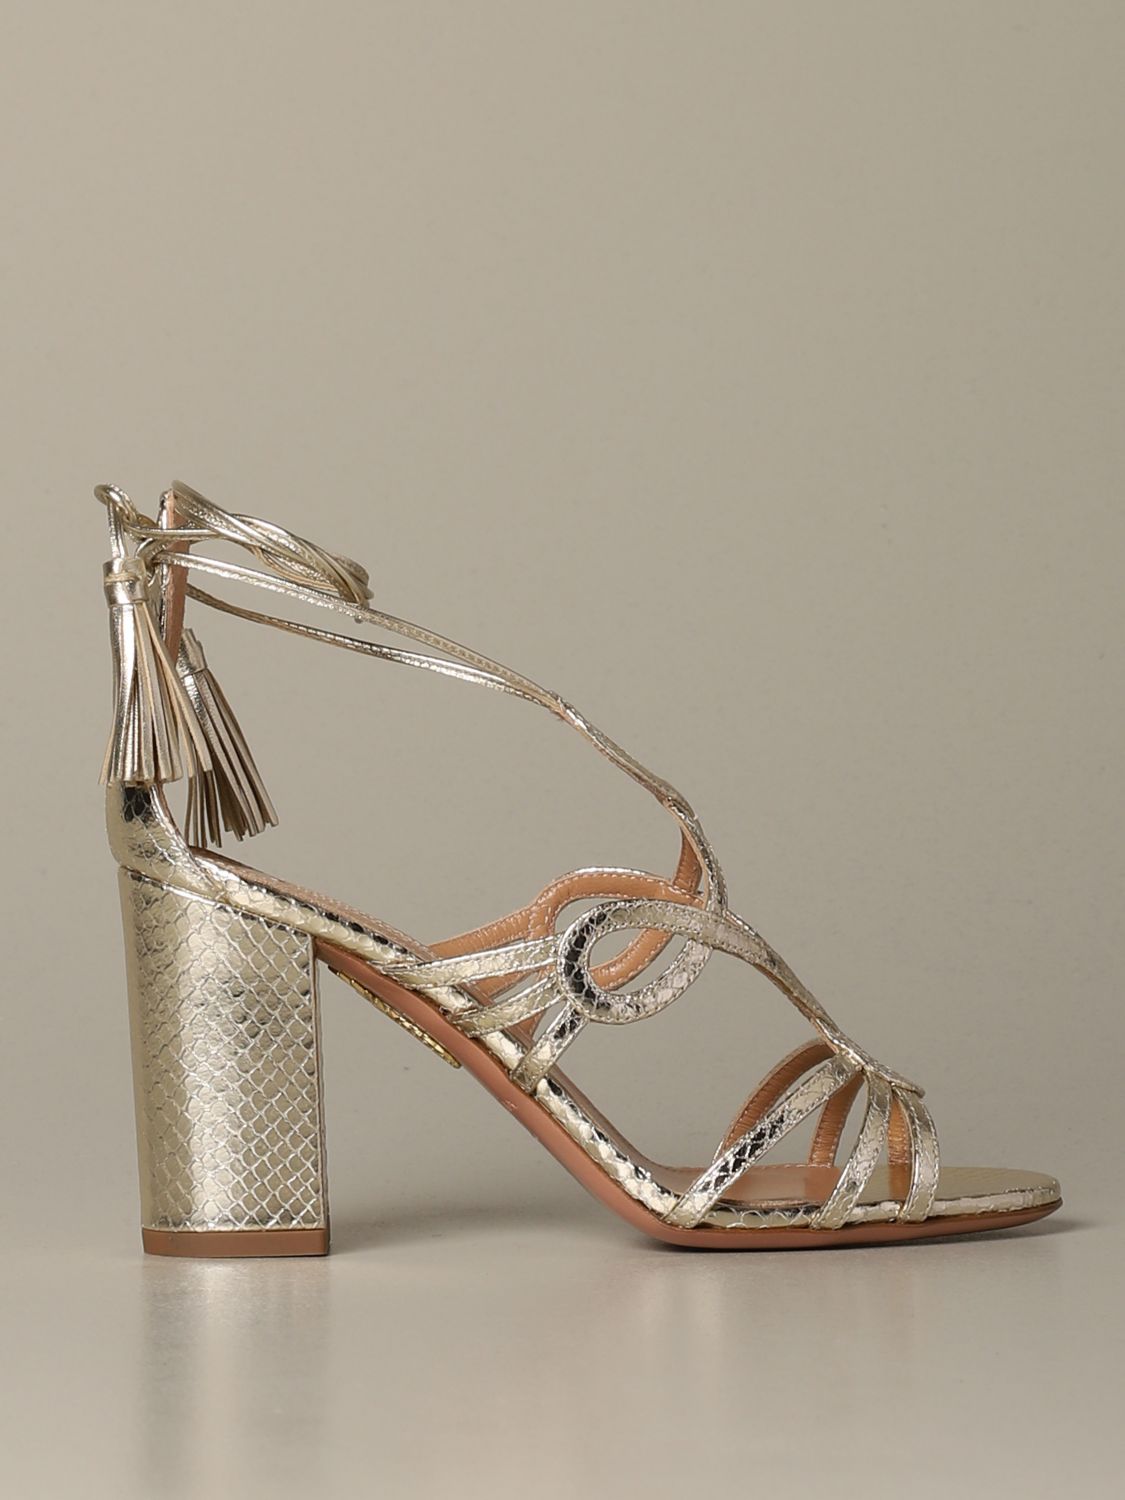 Aquazzura Outlet: Heeled sandals women - Silver | Heeled Sandals ...